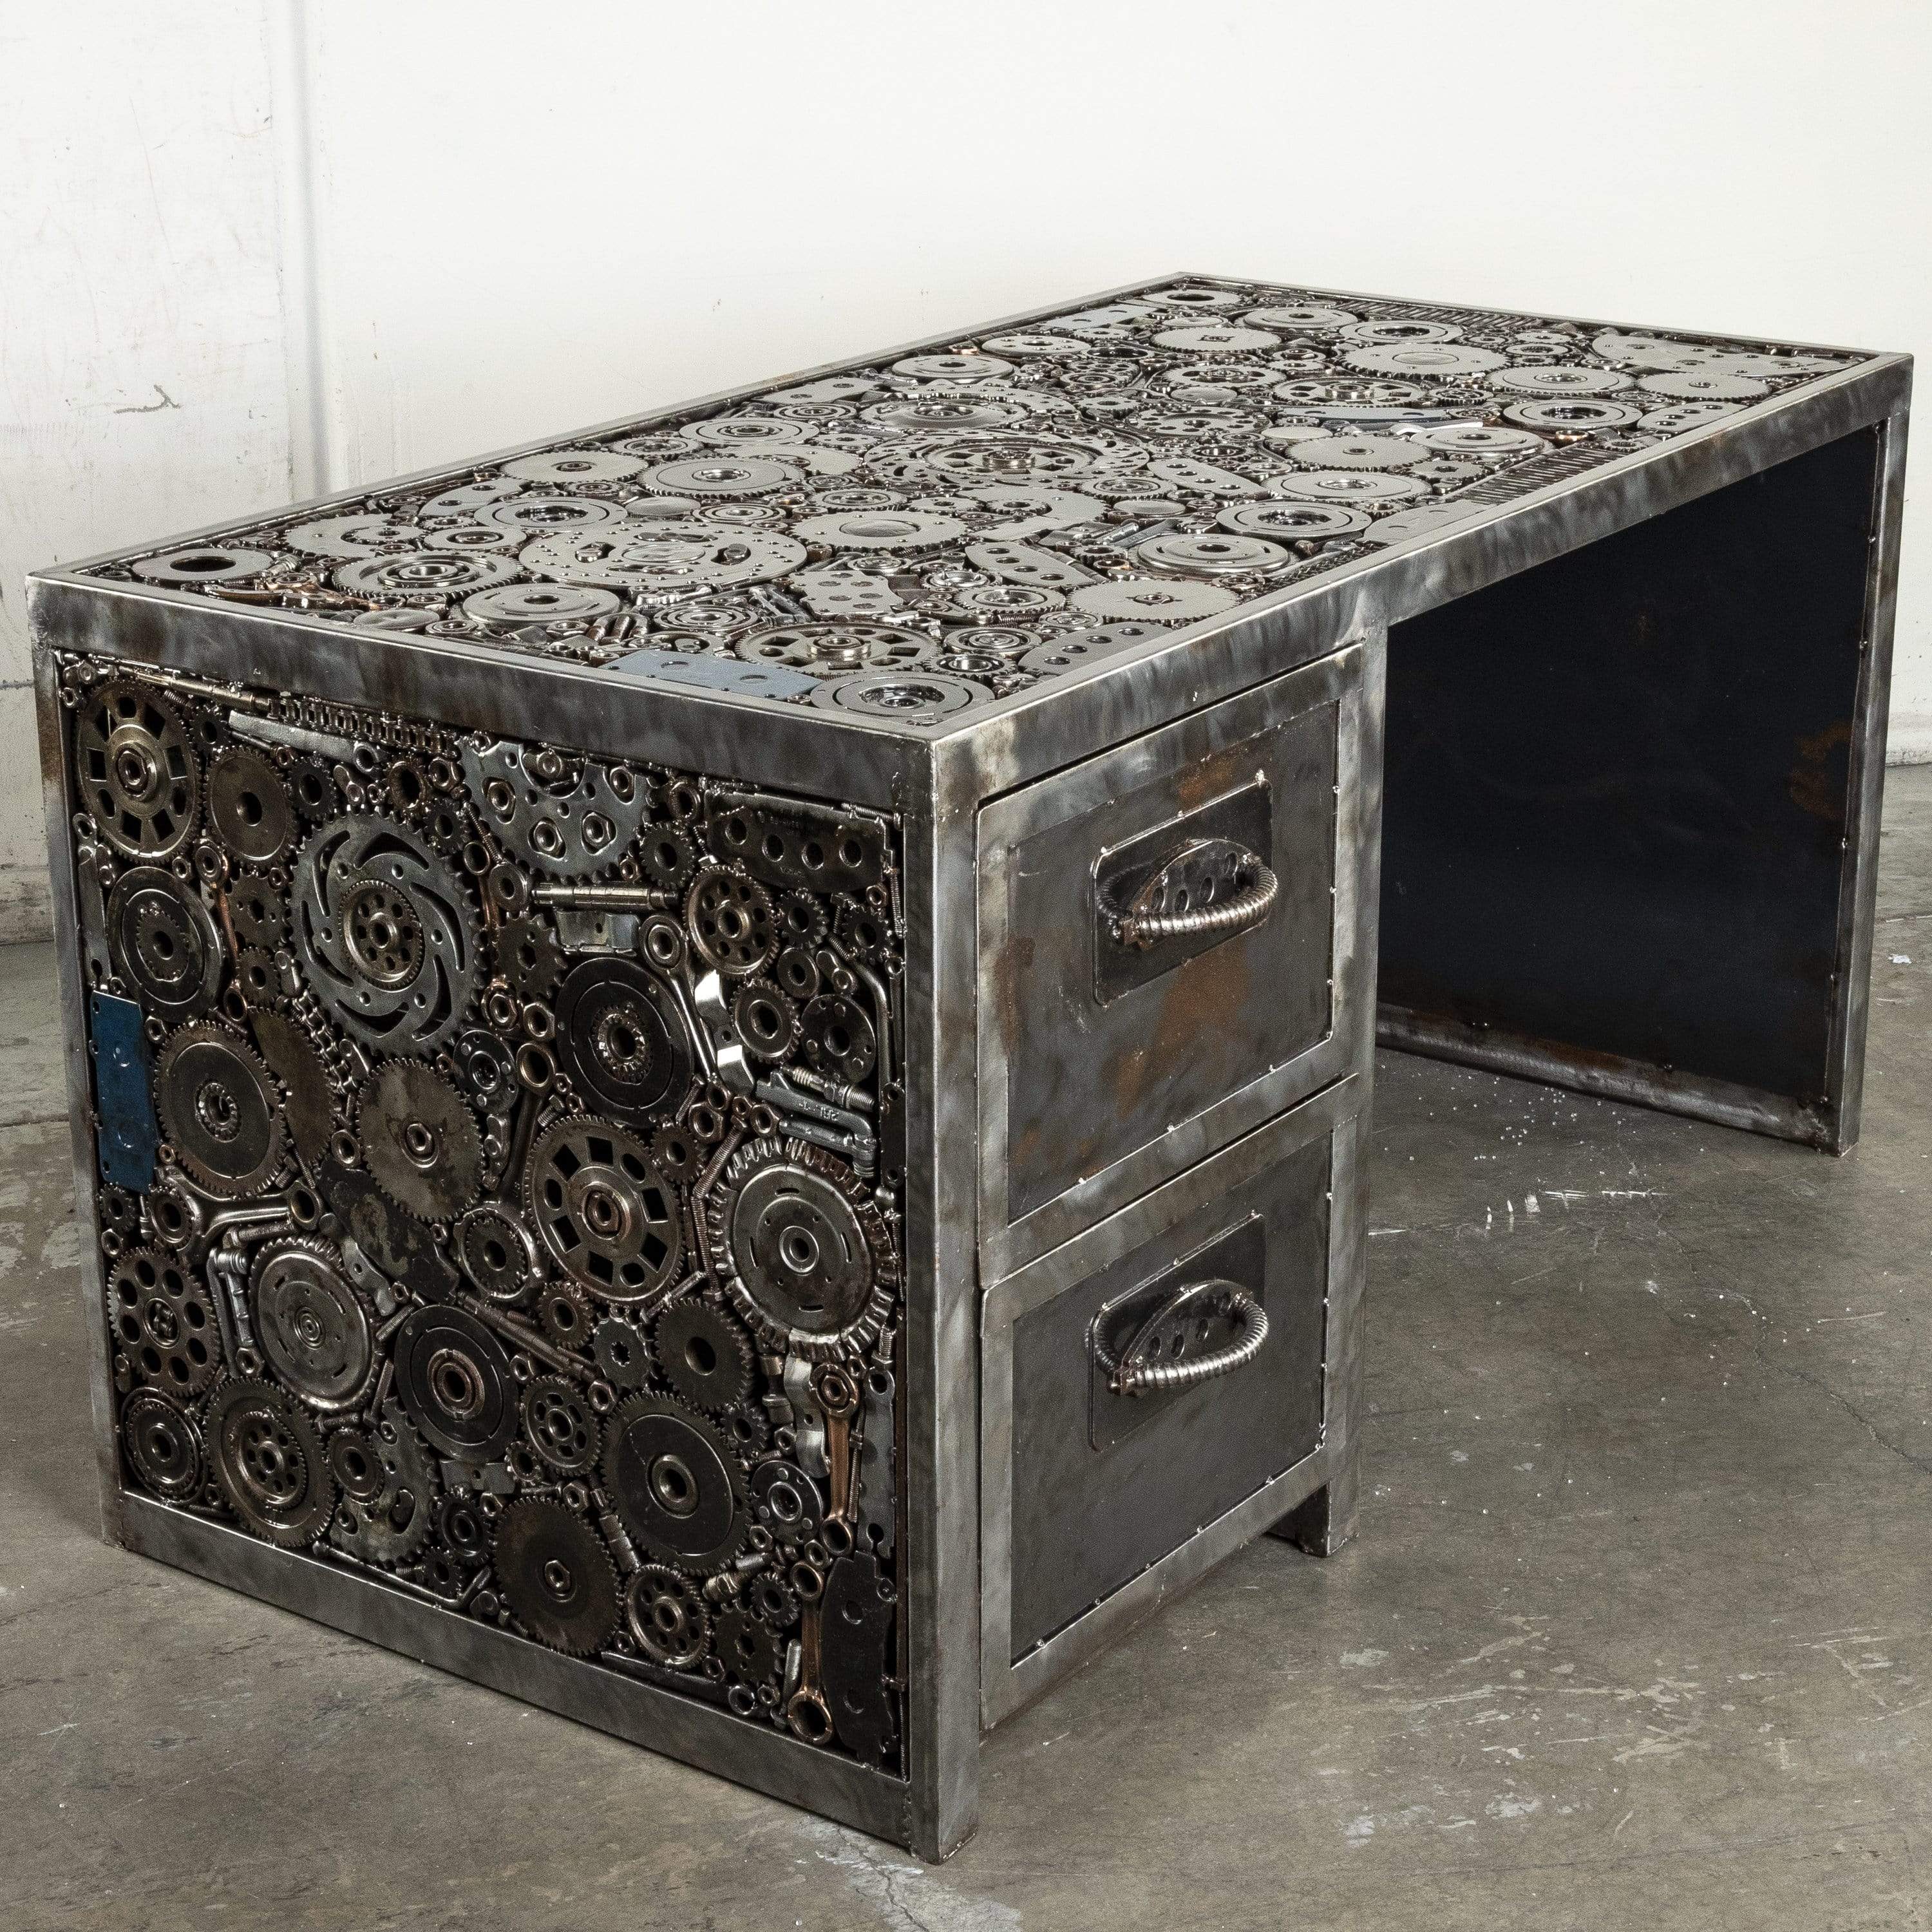 Kalifano Recycled Metal Art 60" Desk Recycled Metal Art RMS-DESK-N